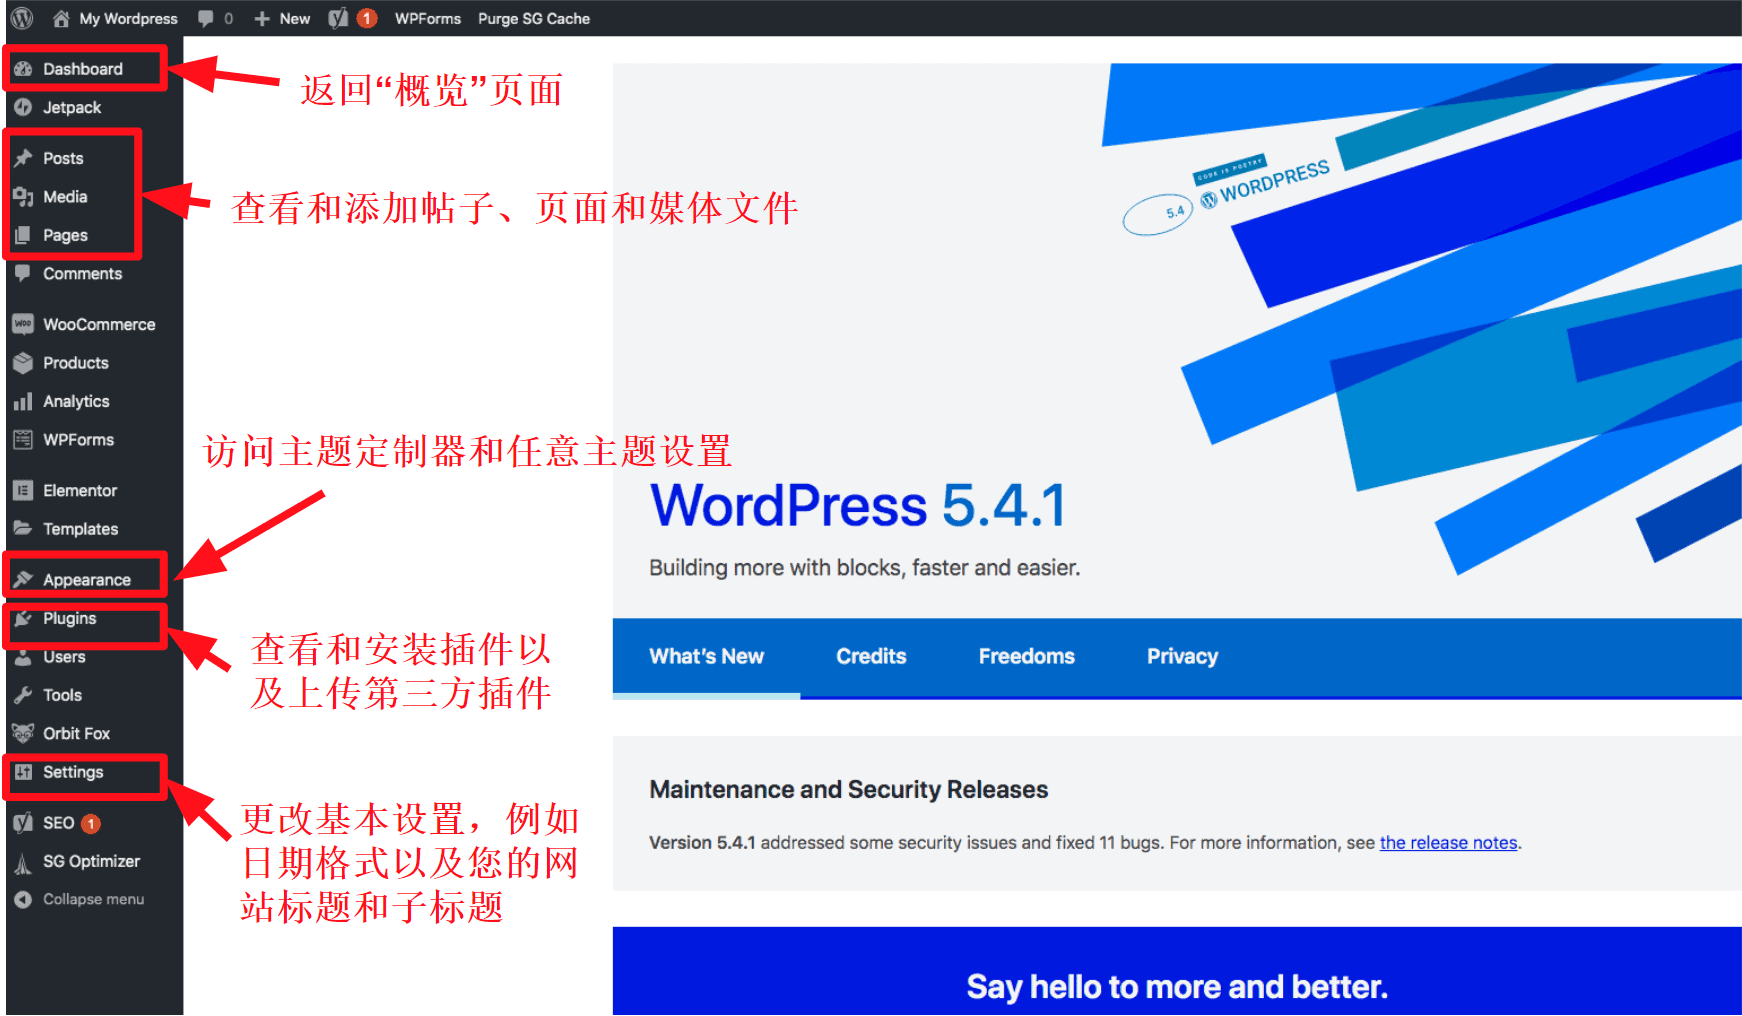 The WordPress dashboard ZH16 1